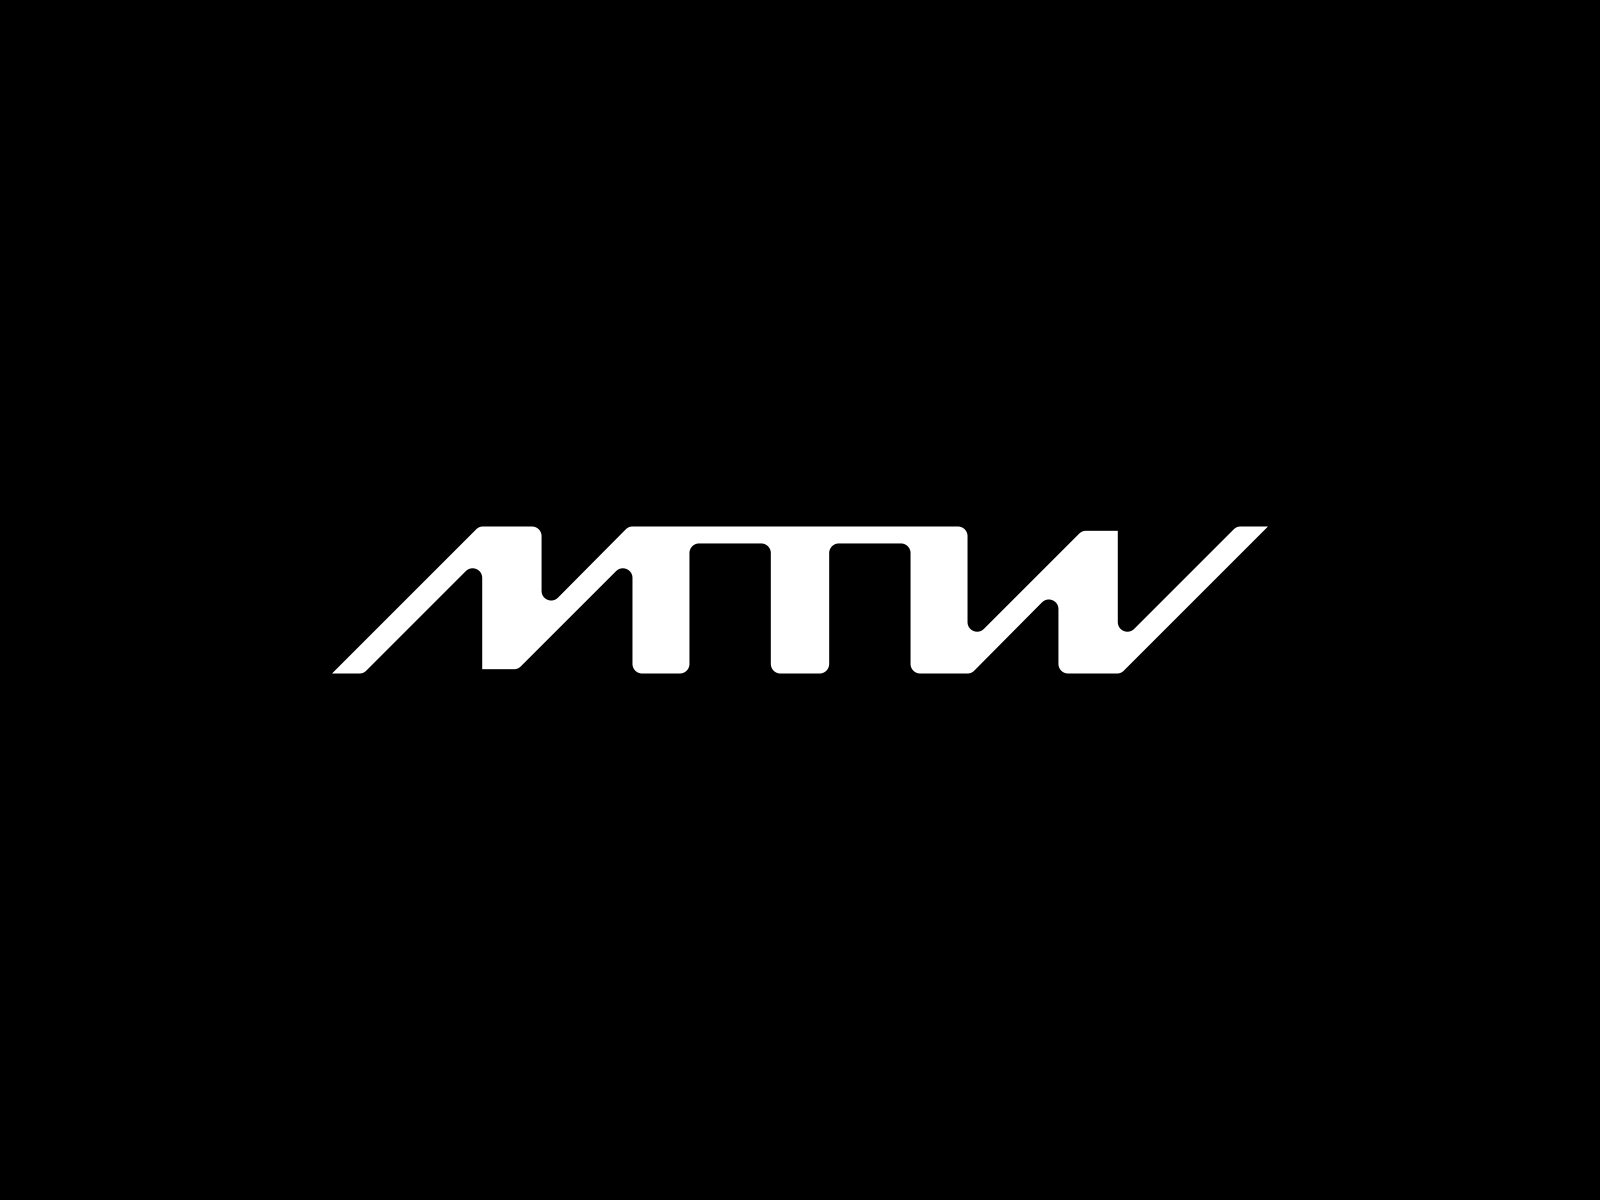 MTW Logotype by Kit Lim on Dribbble